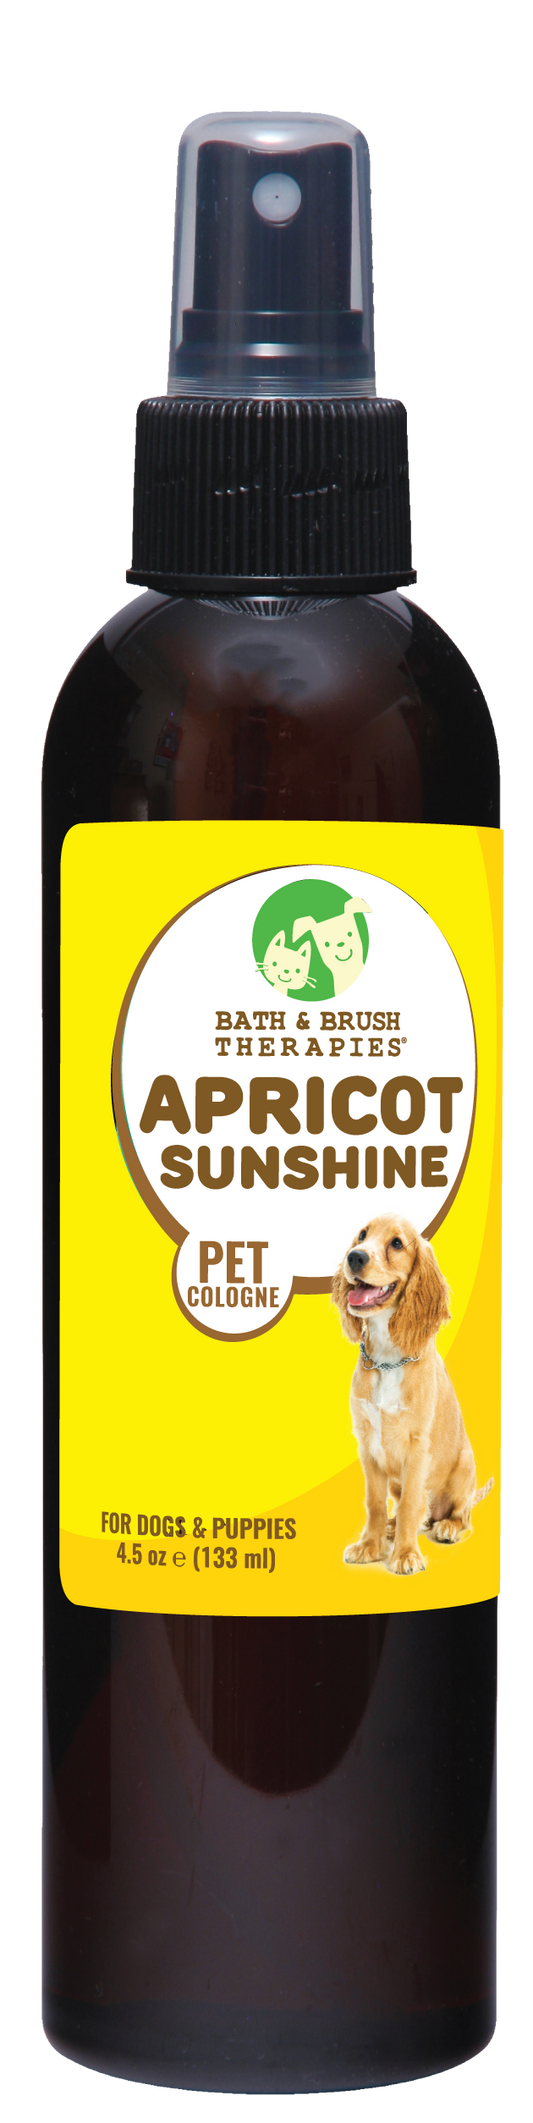 Apricot Sunshine Pet Cologne | Bath & Brush Therapies®